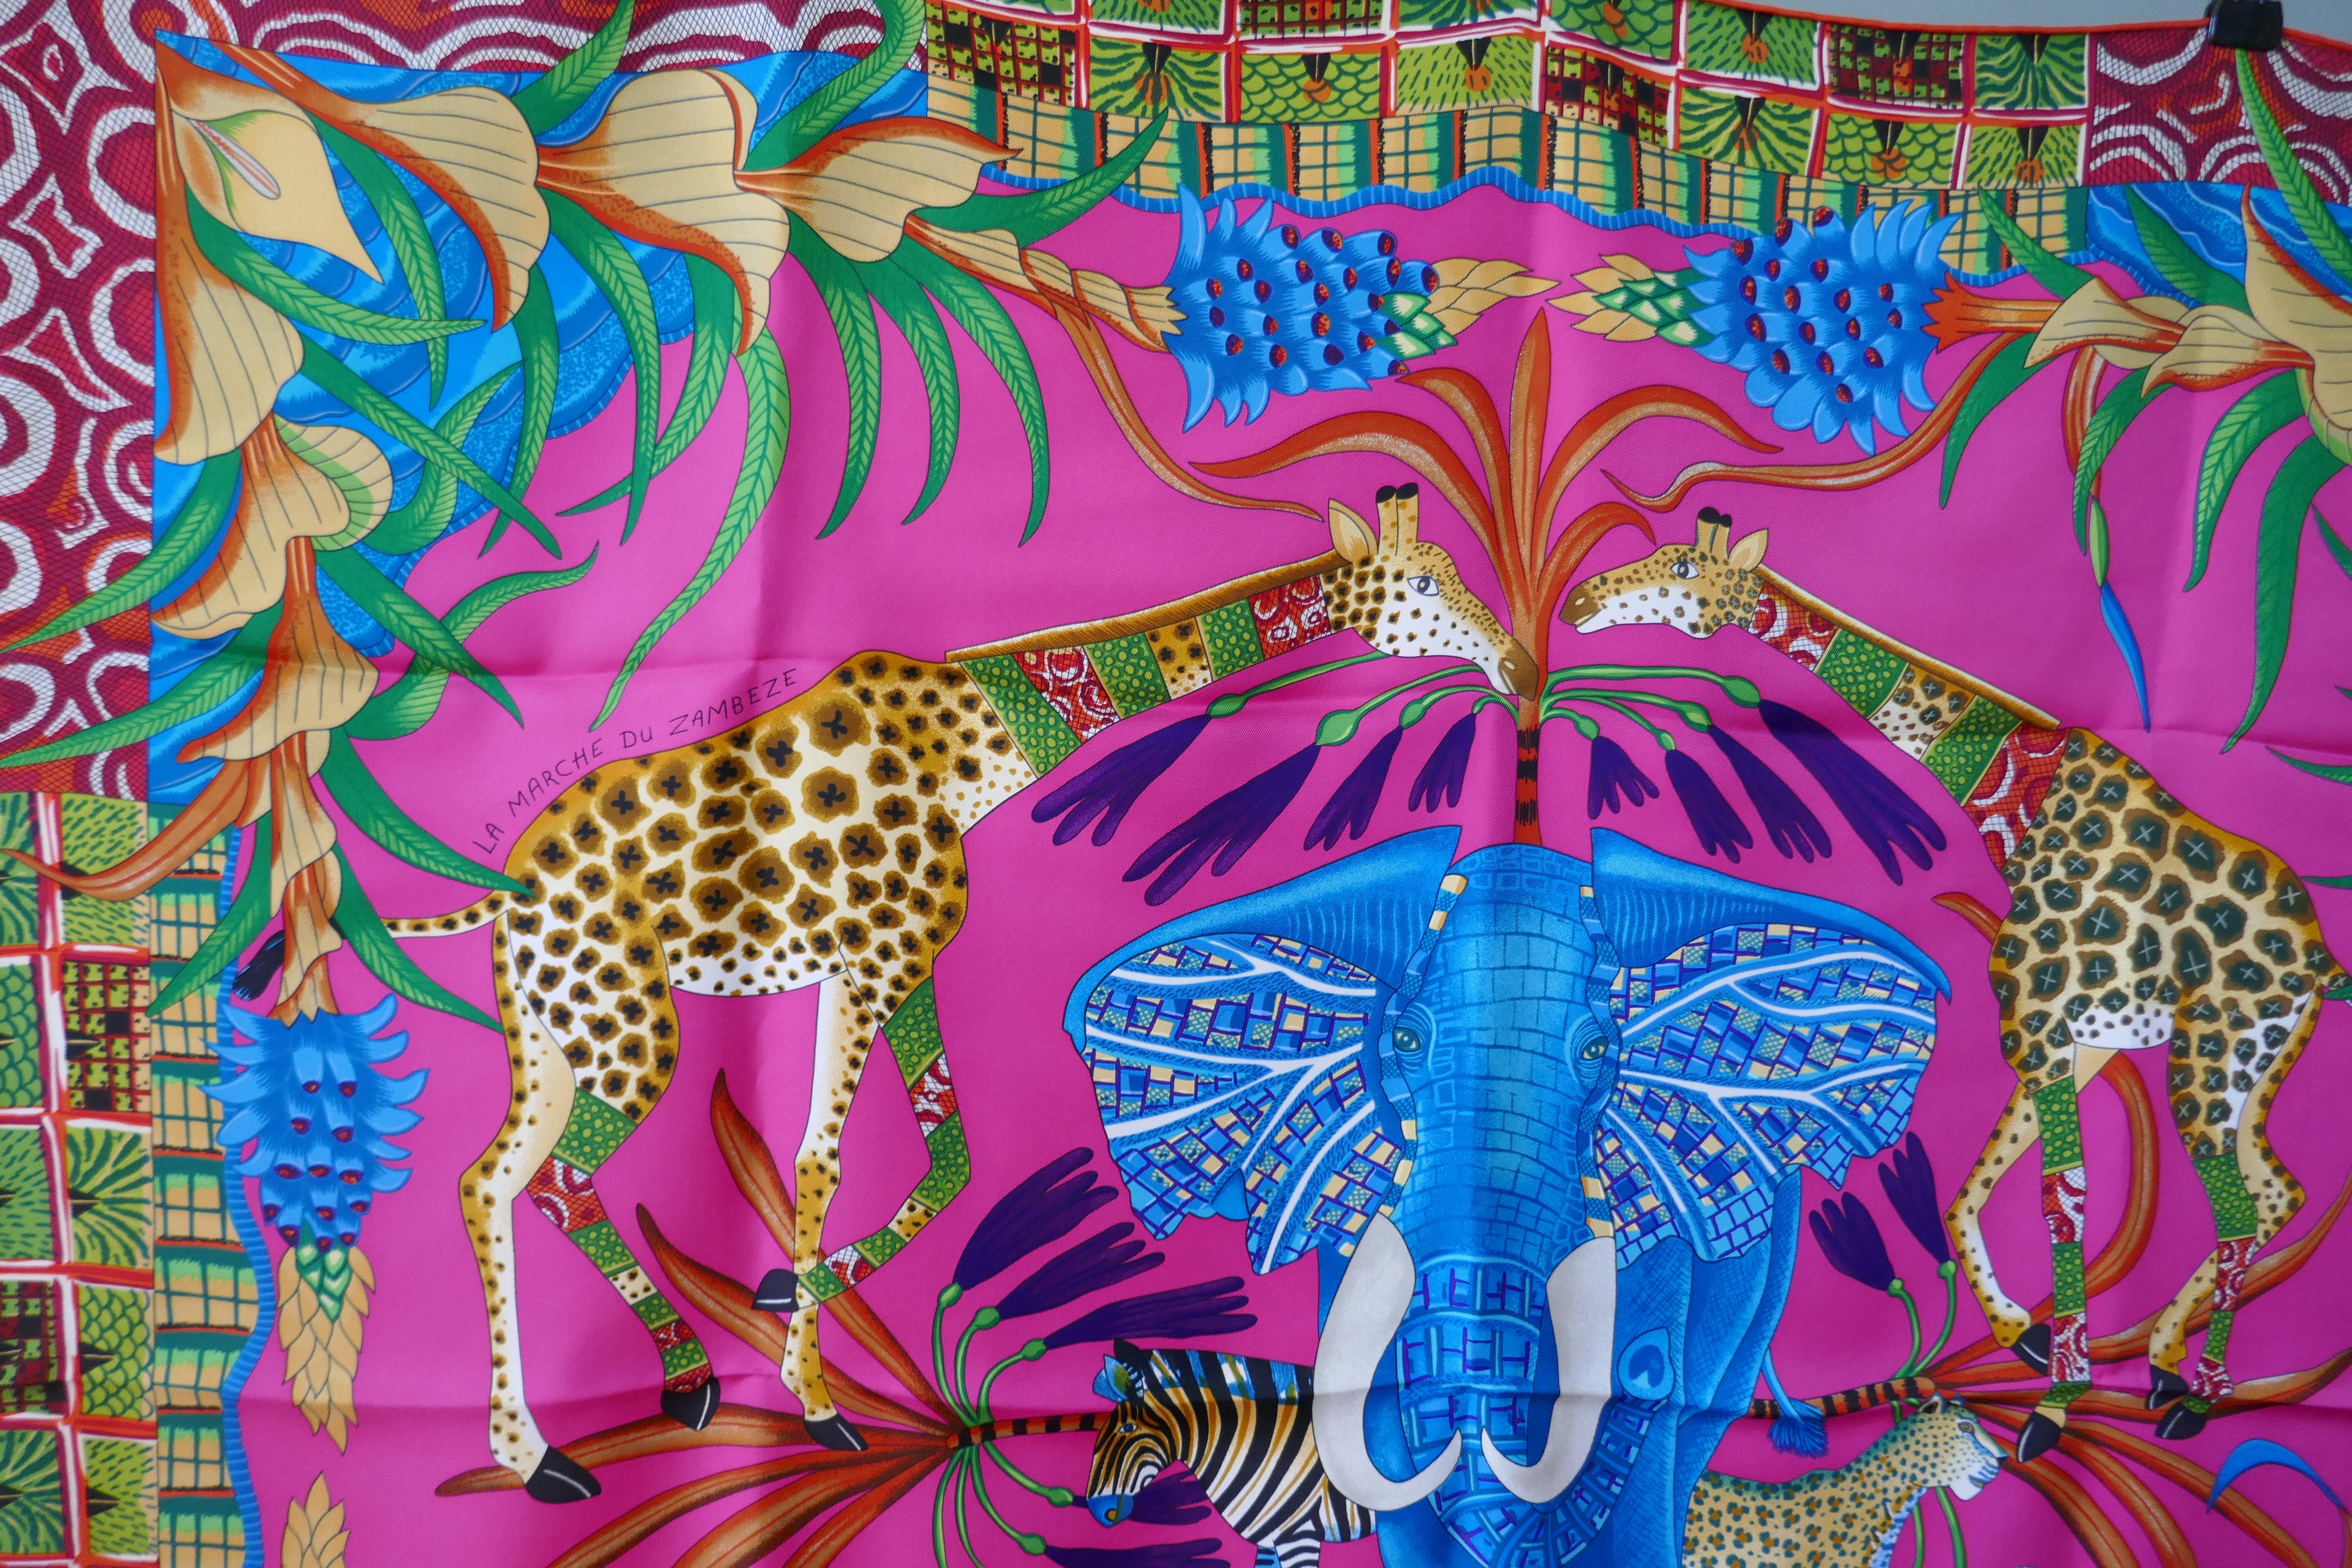 HERMÈS Ardmore Artists design “La Marche du Zambeze” 100% Silk Scarf,  4